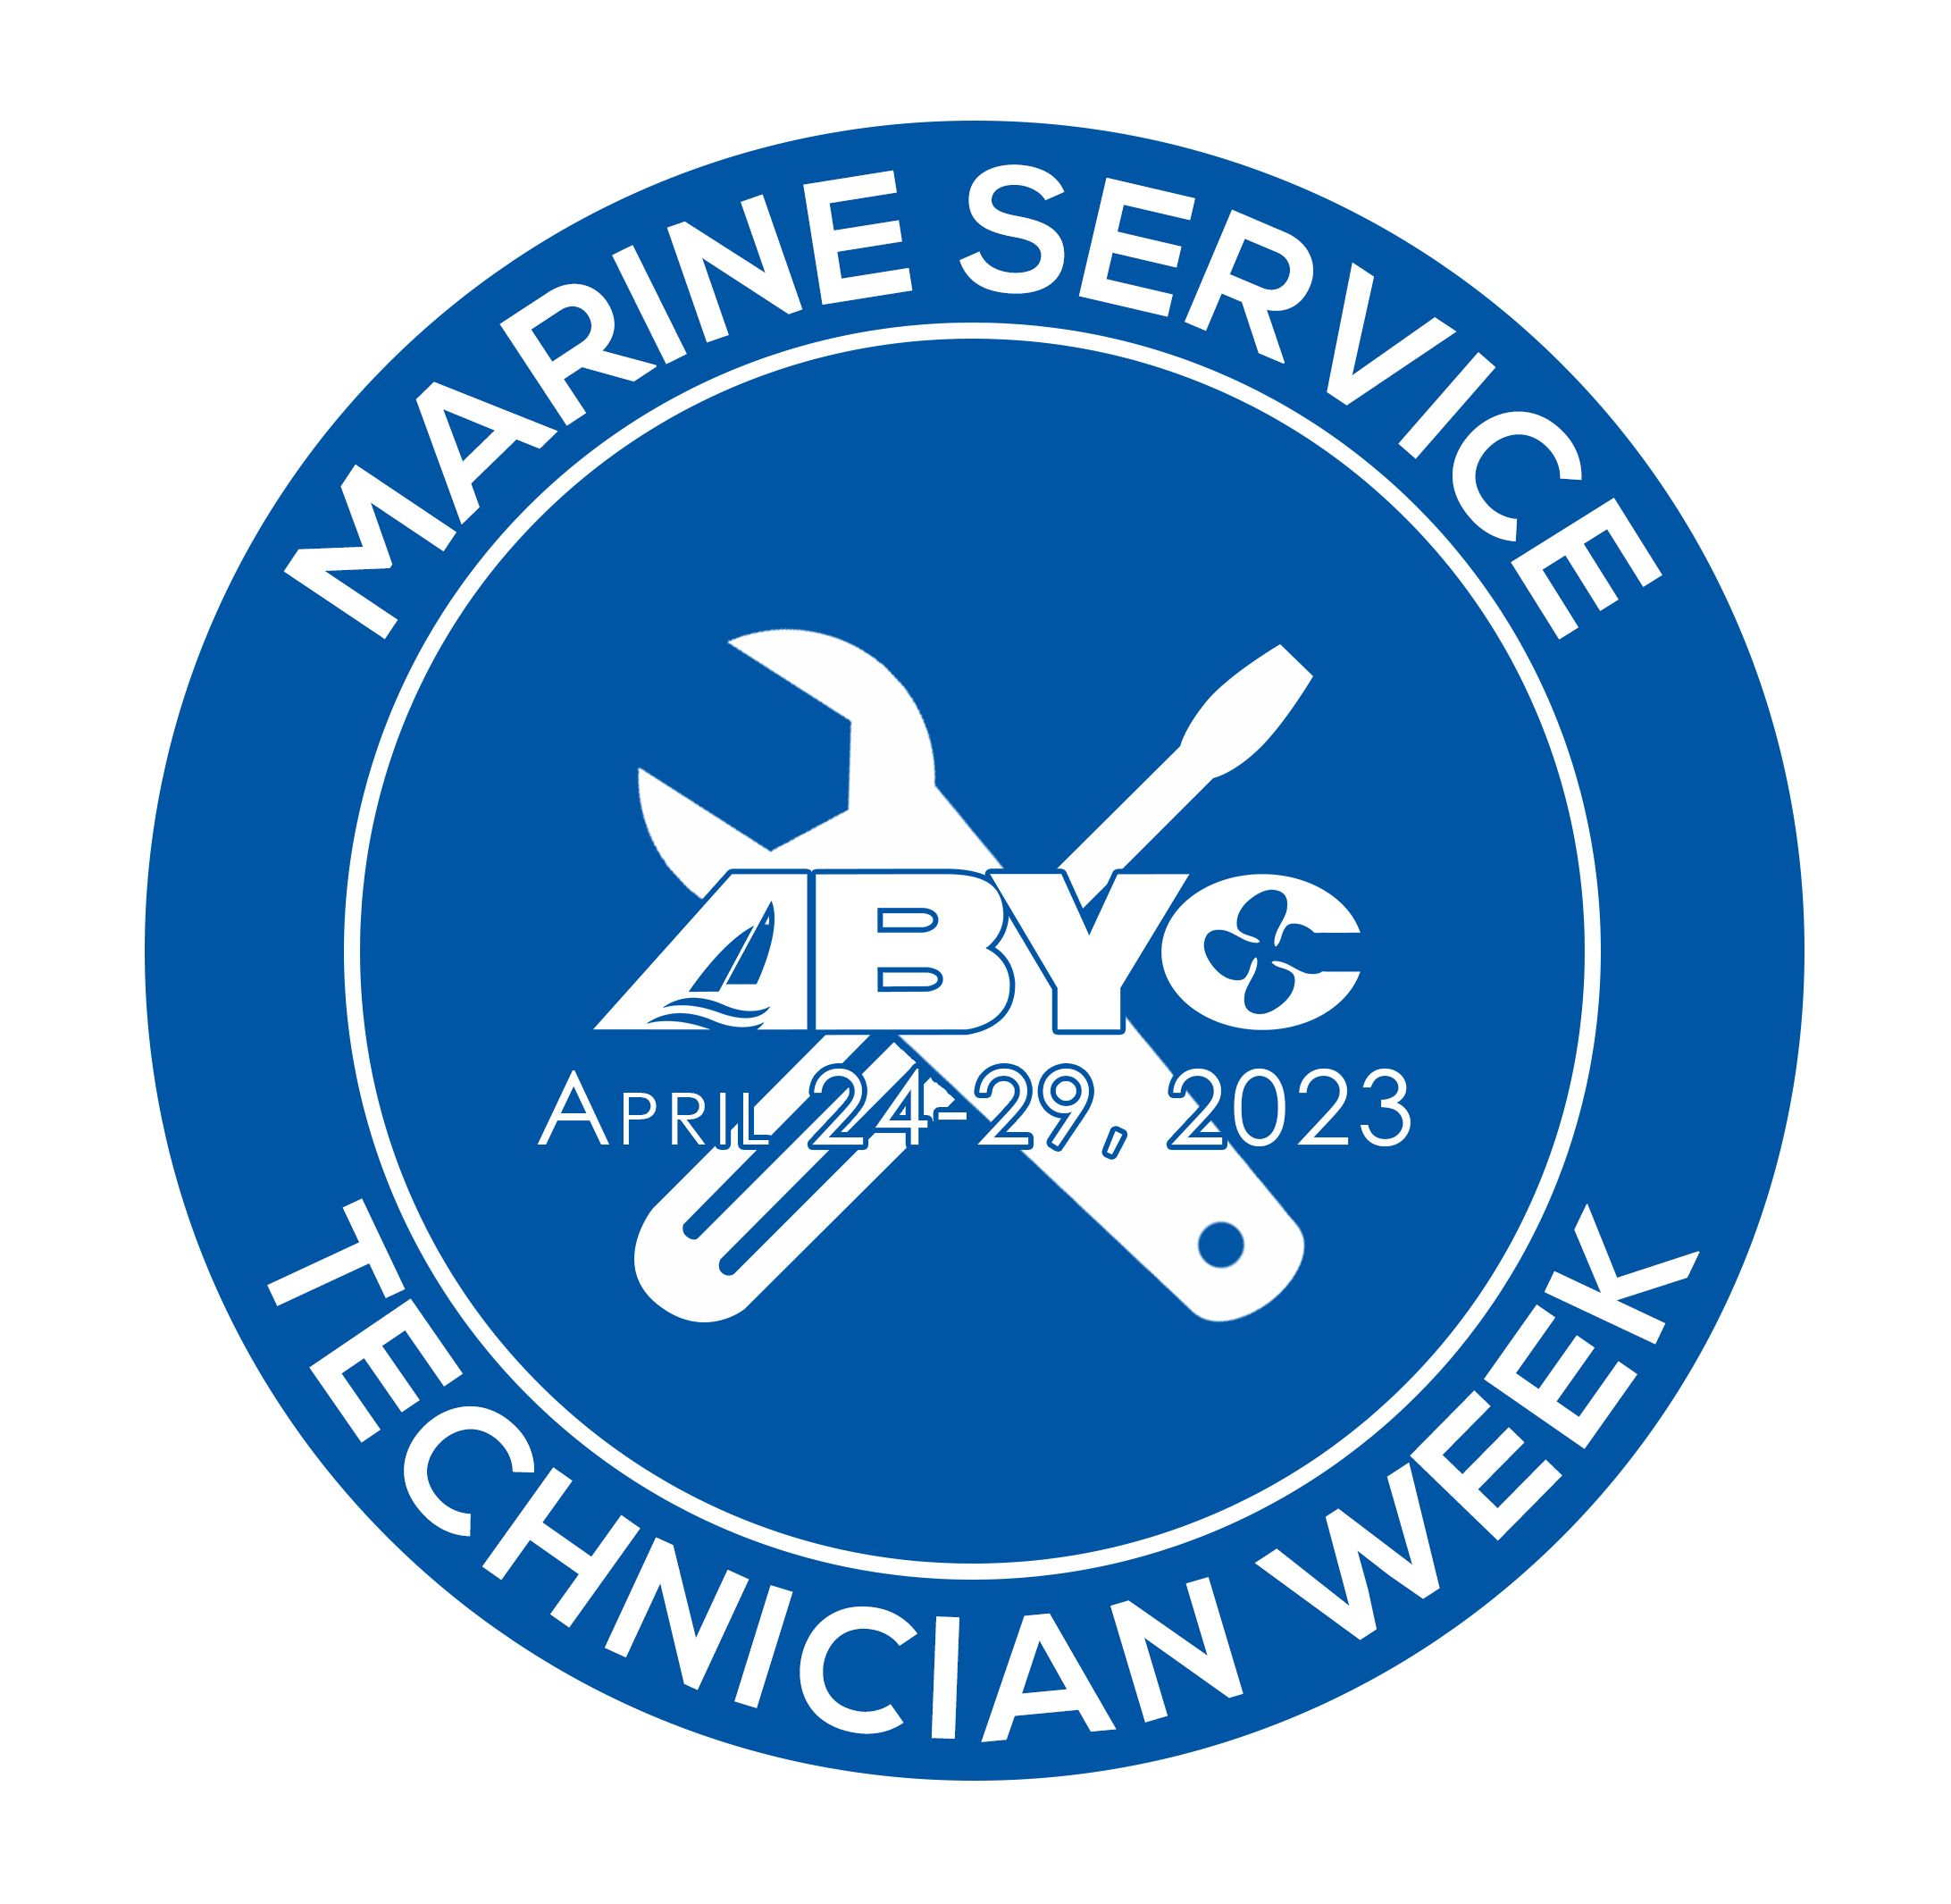 ABYC announces Marine Service Technician Week